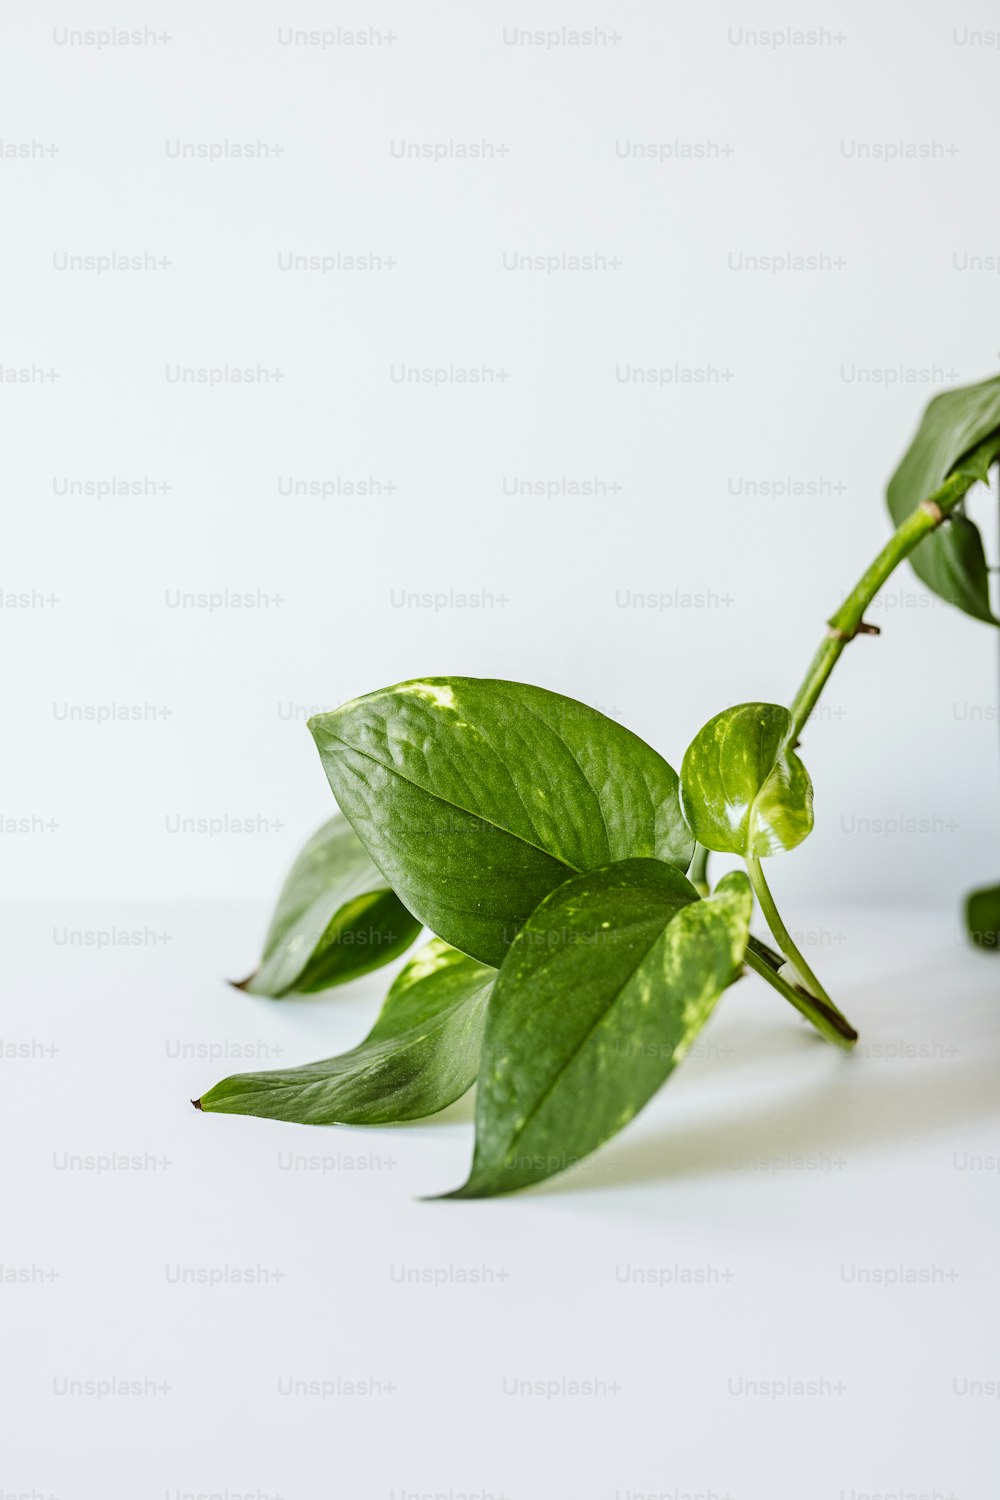 una pianta con foglie verdi su una superficie bianca